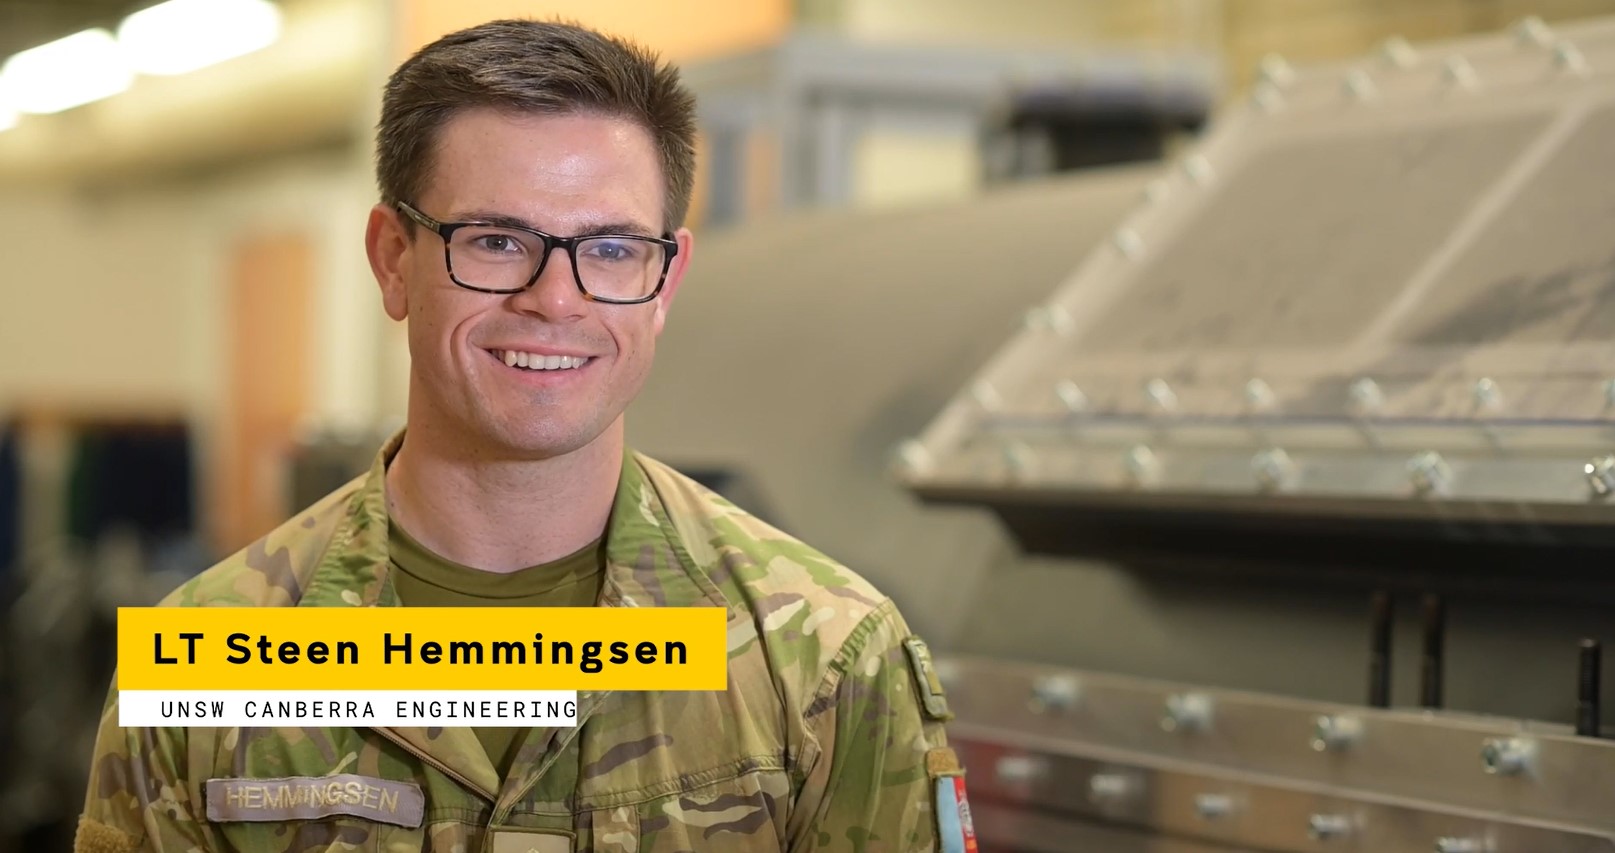 Lieutenant Steen Hemmingsen